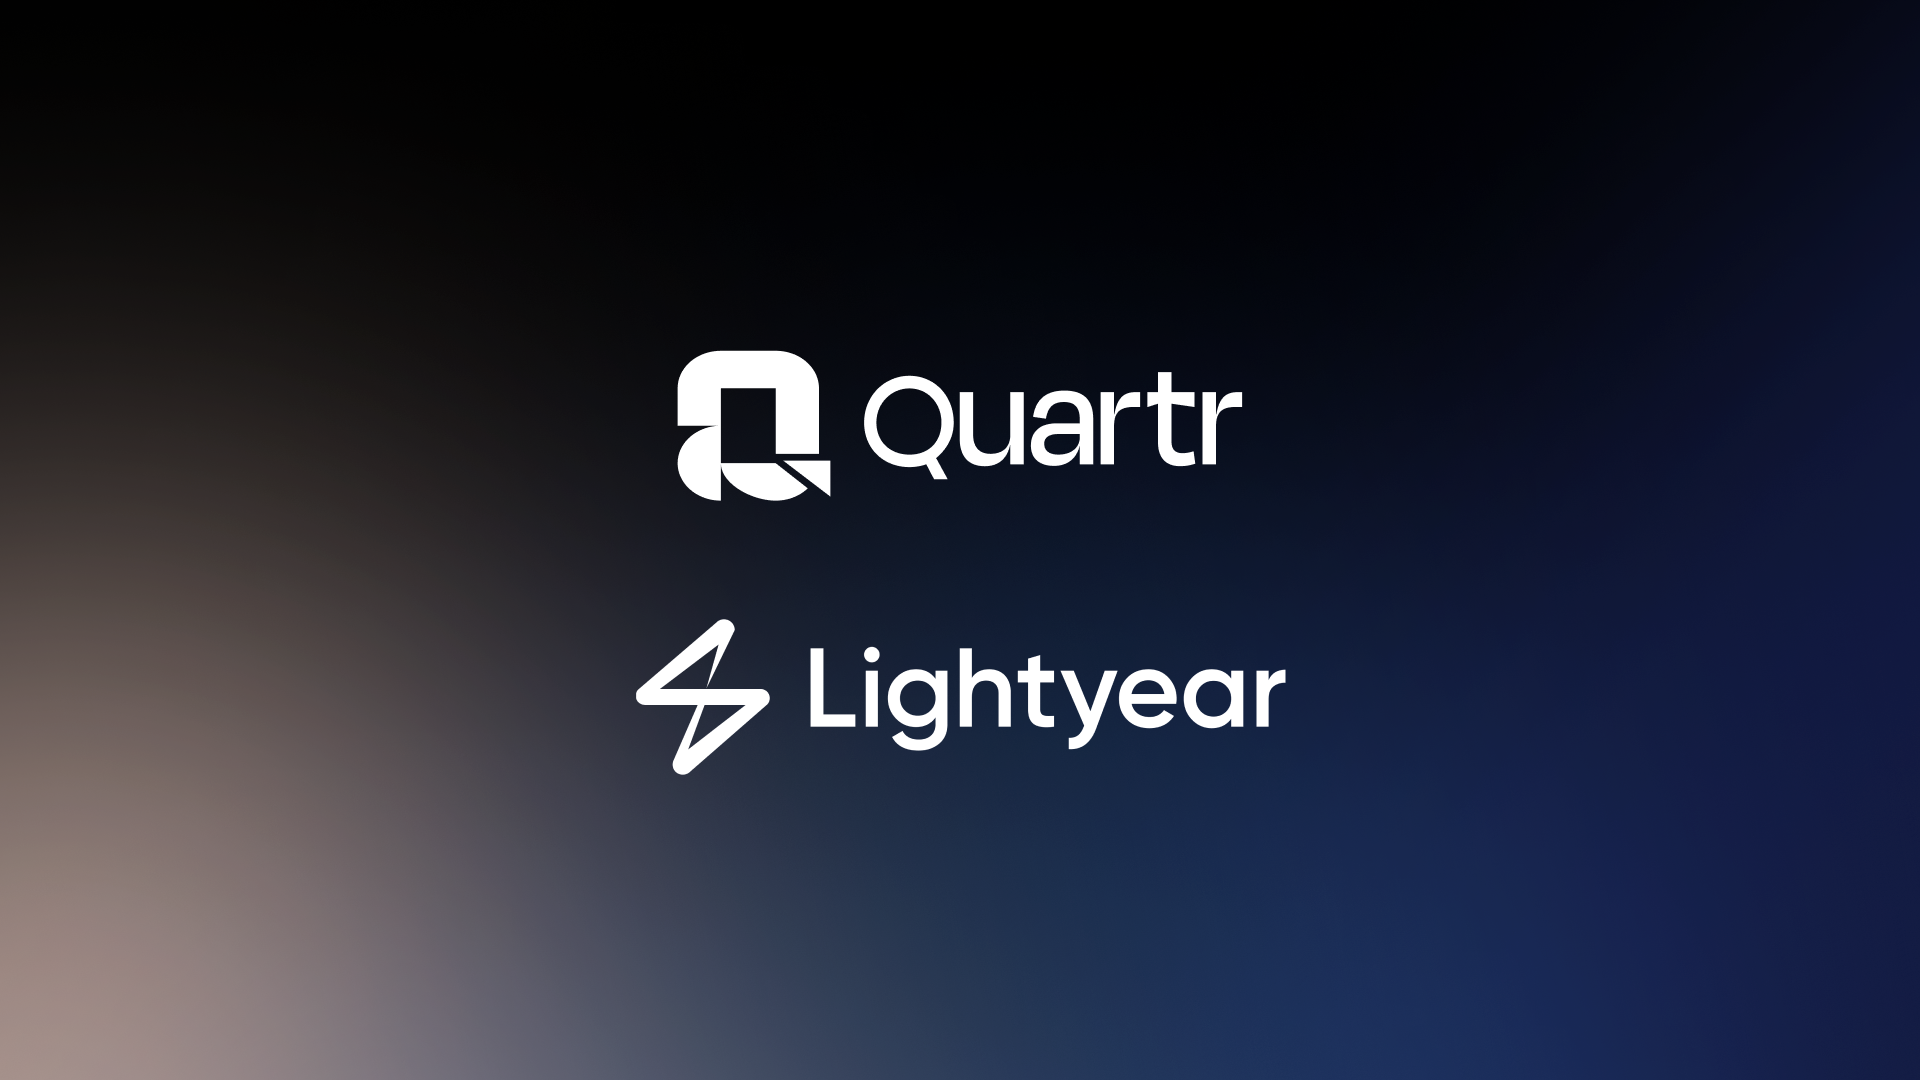 Quartr and Lightyear logos